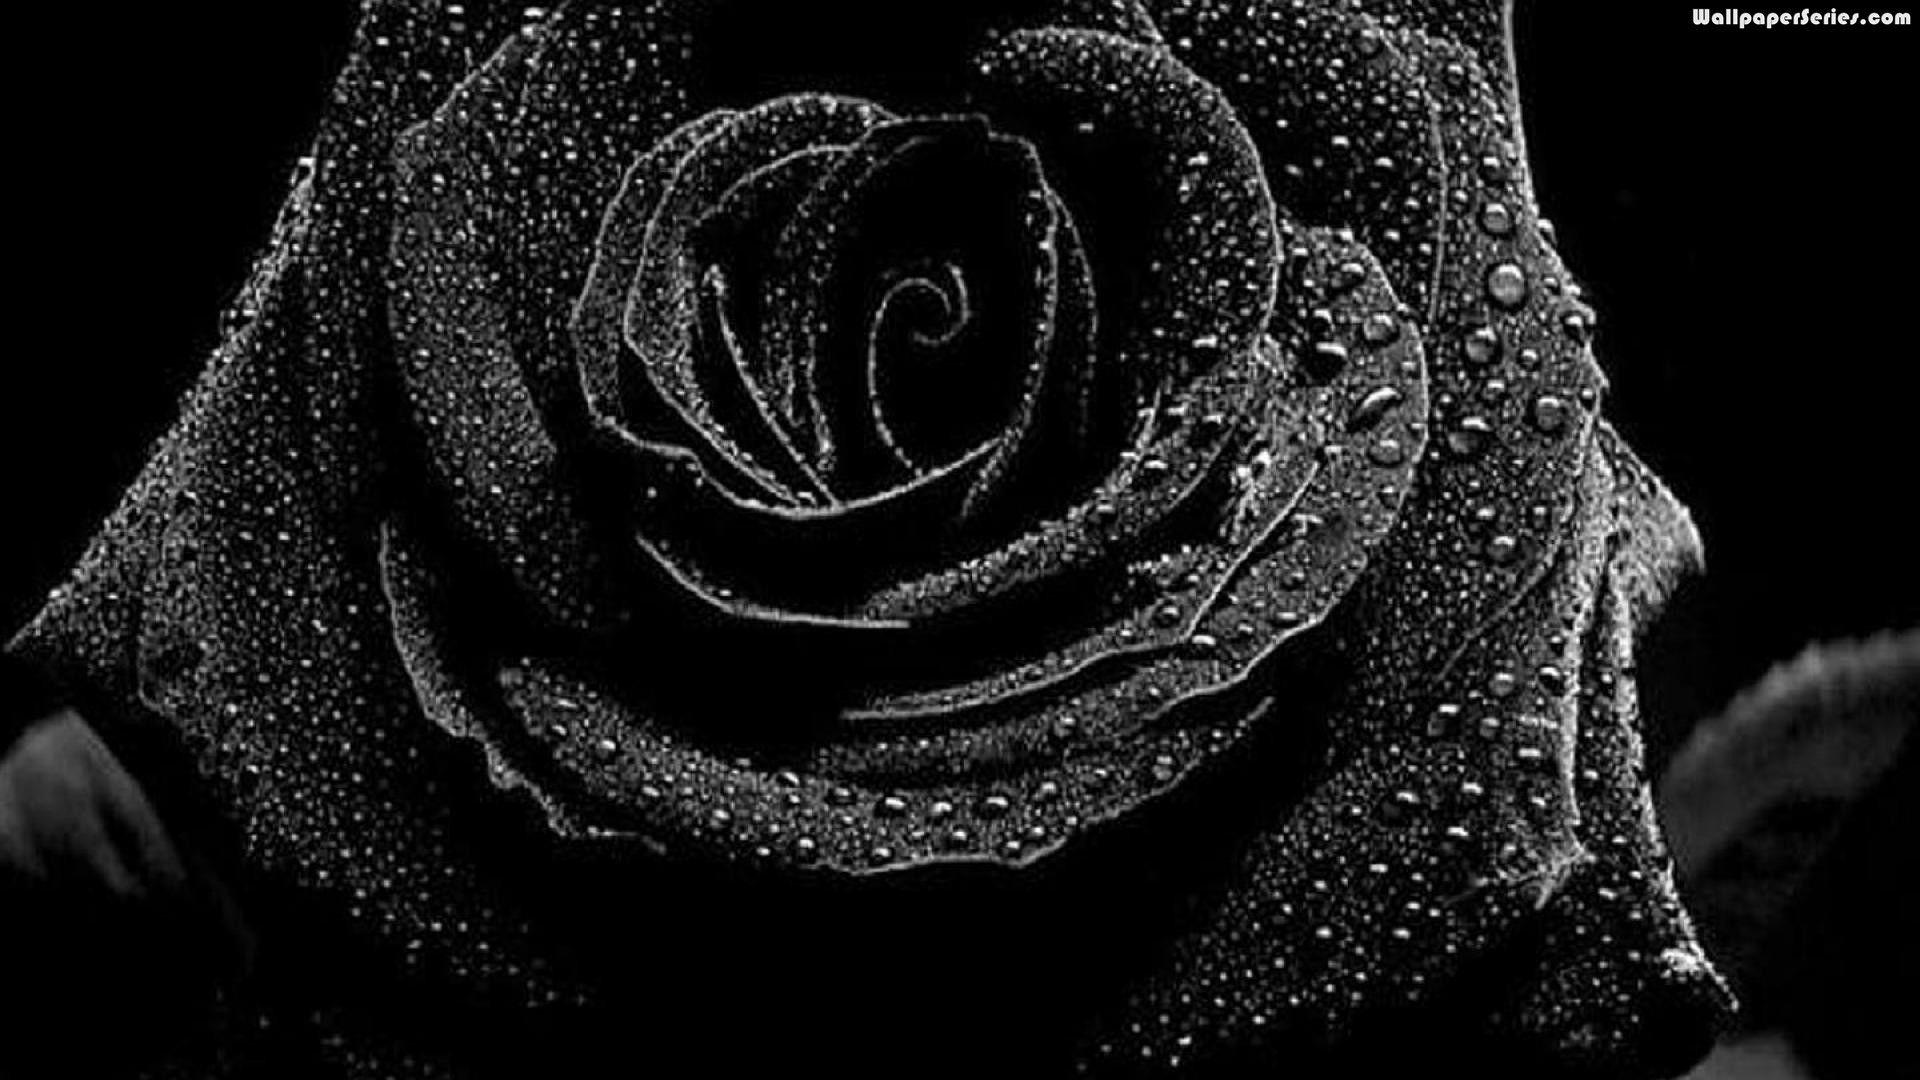  Black  Rose  Wallpapers  Top Free Black  Rose  Backgrounds  